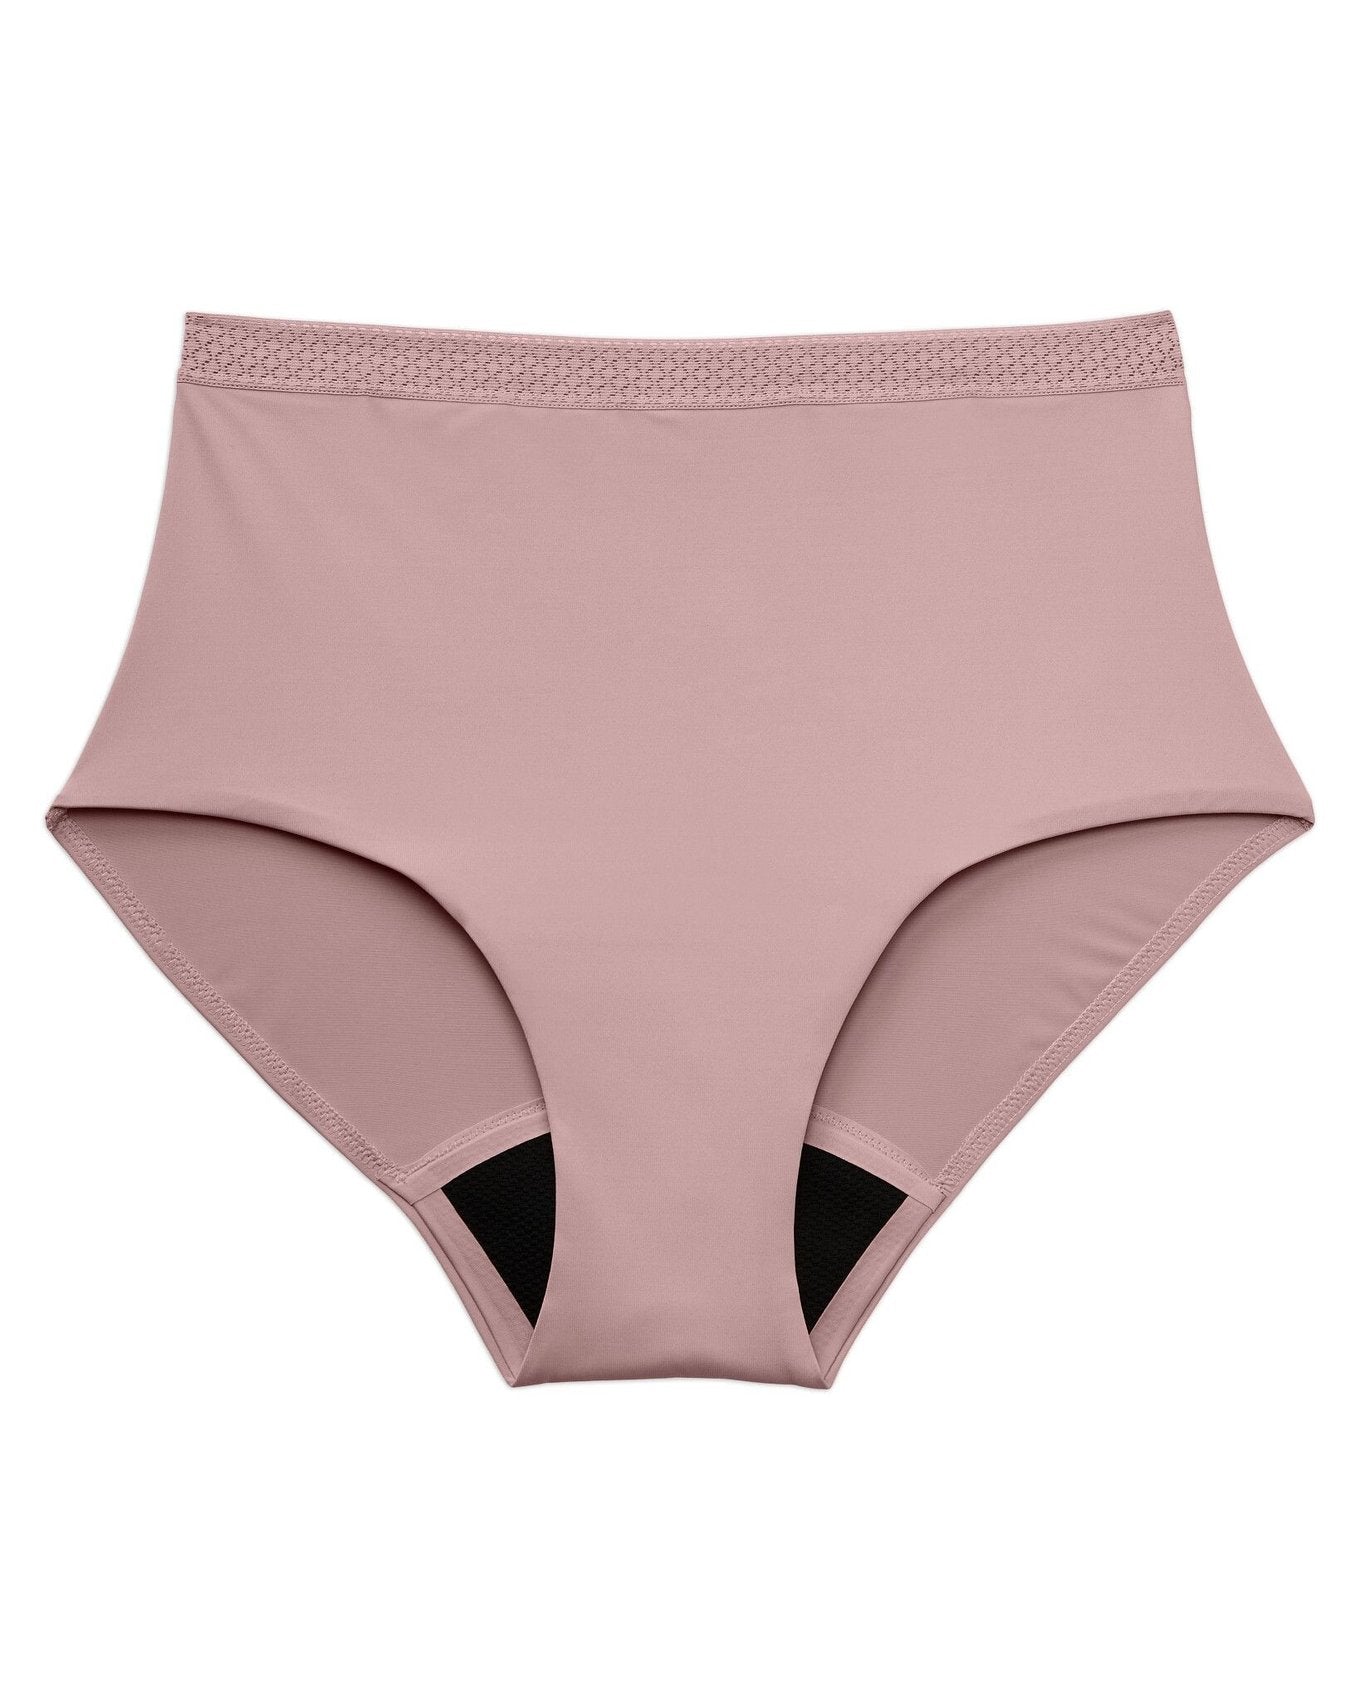 Proof® Period & Leak Resistant High Waist Super Light Absorbency Smoothing  Underwear